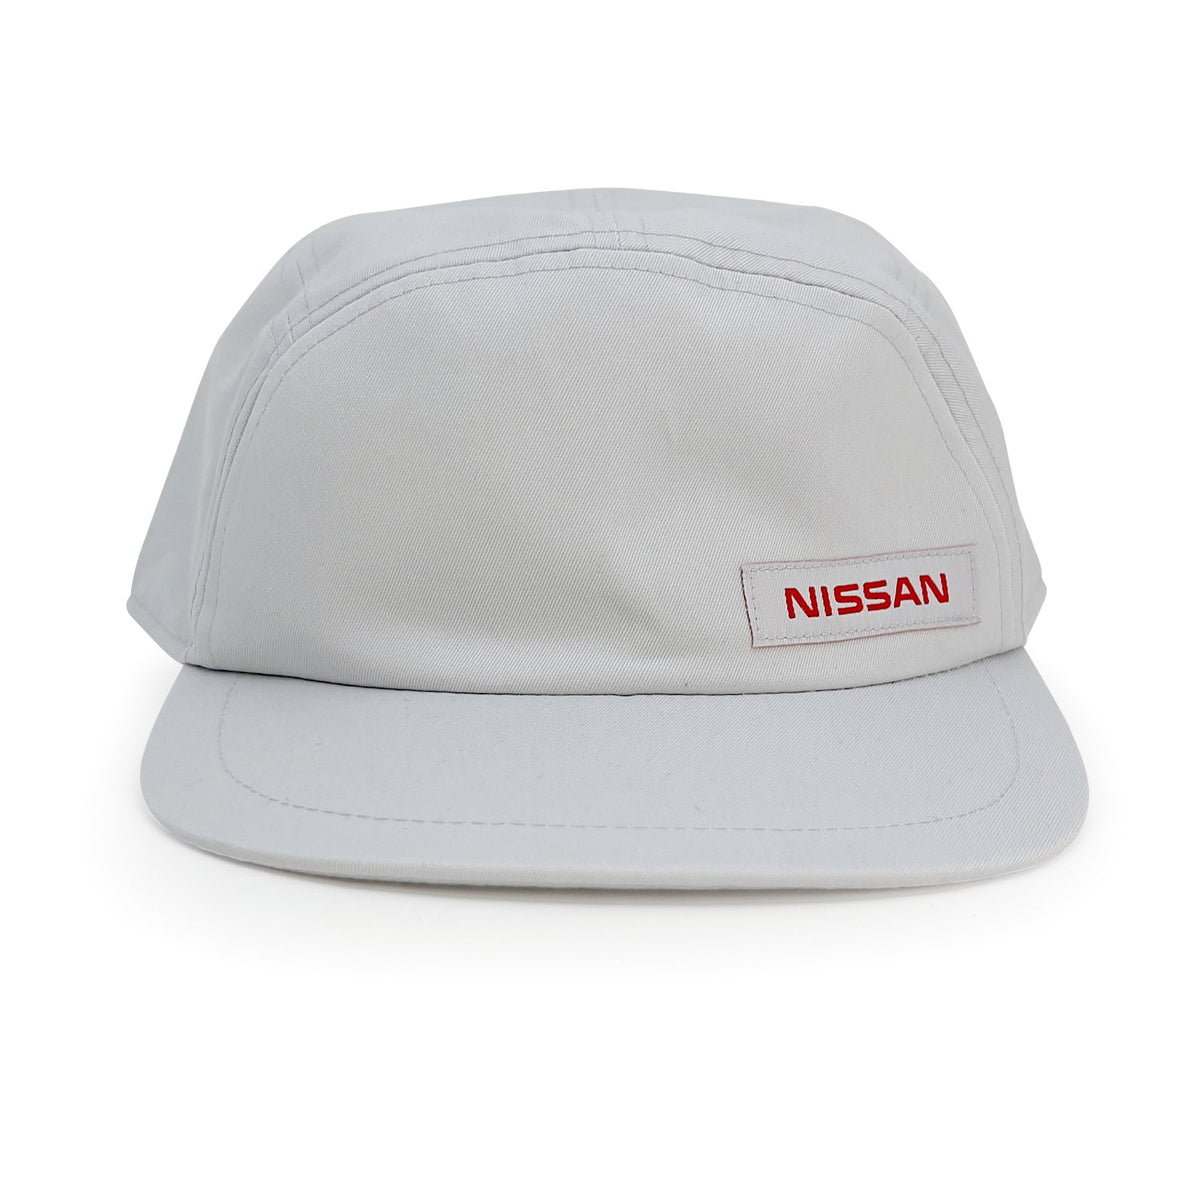 New Japanese Genuine JDM Nissan Mechanic Uniform Hat Cap Grey - Sugoi JDM